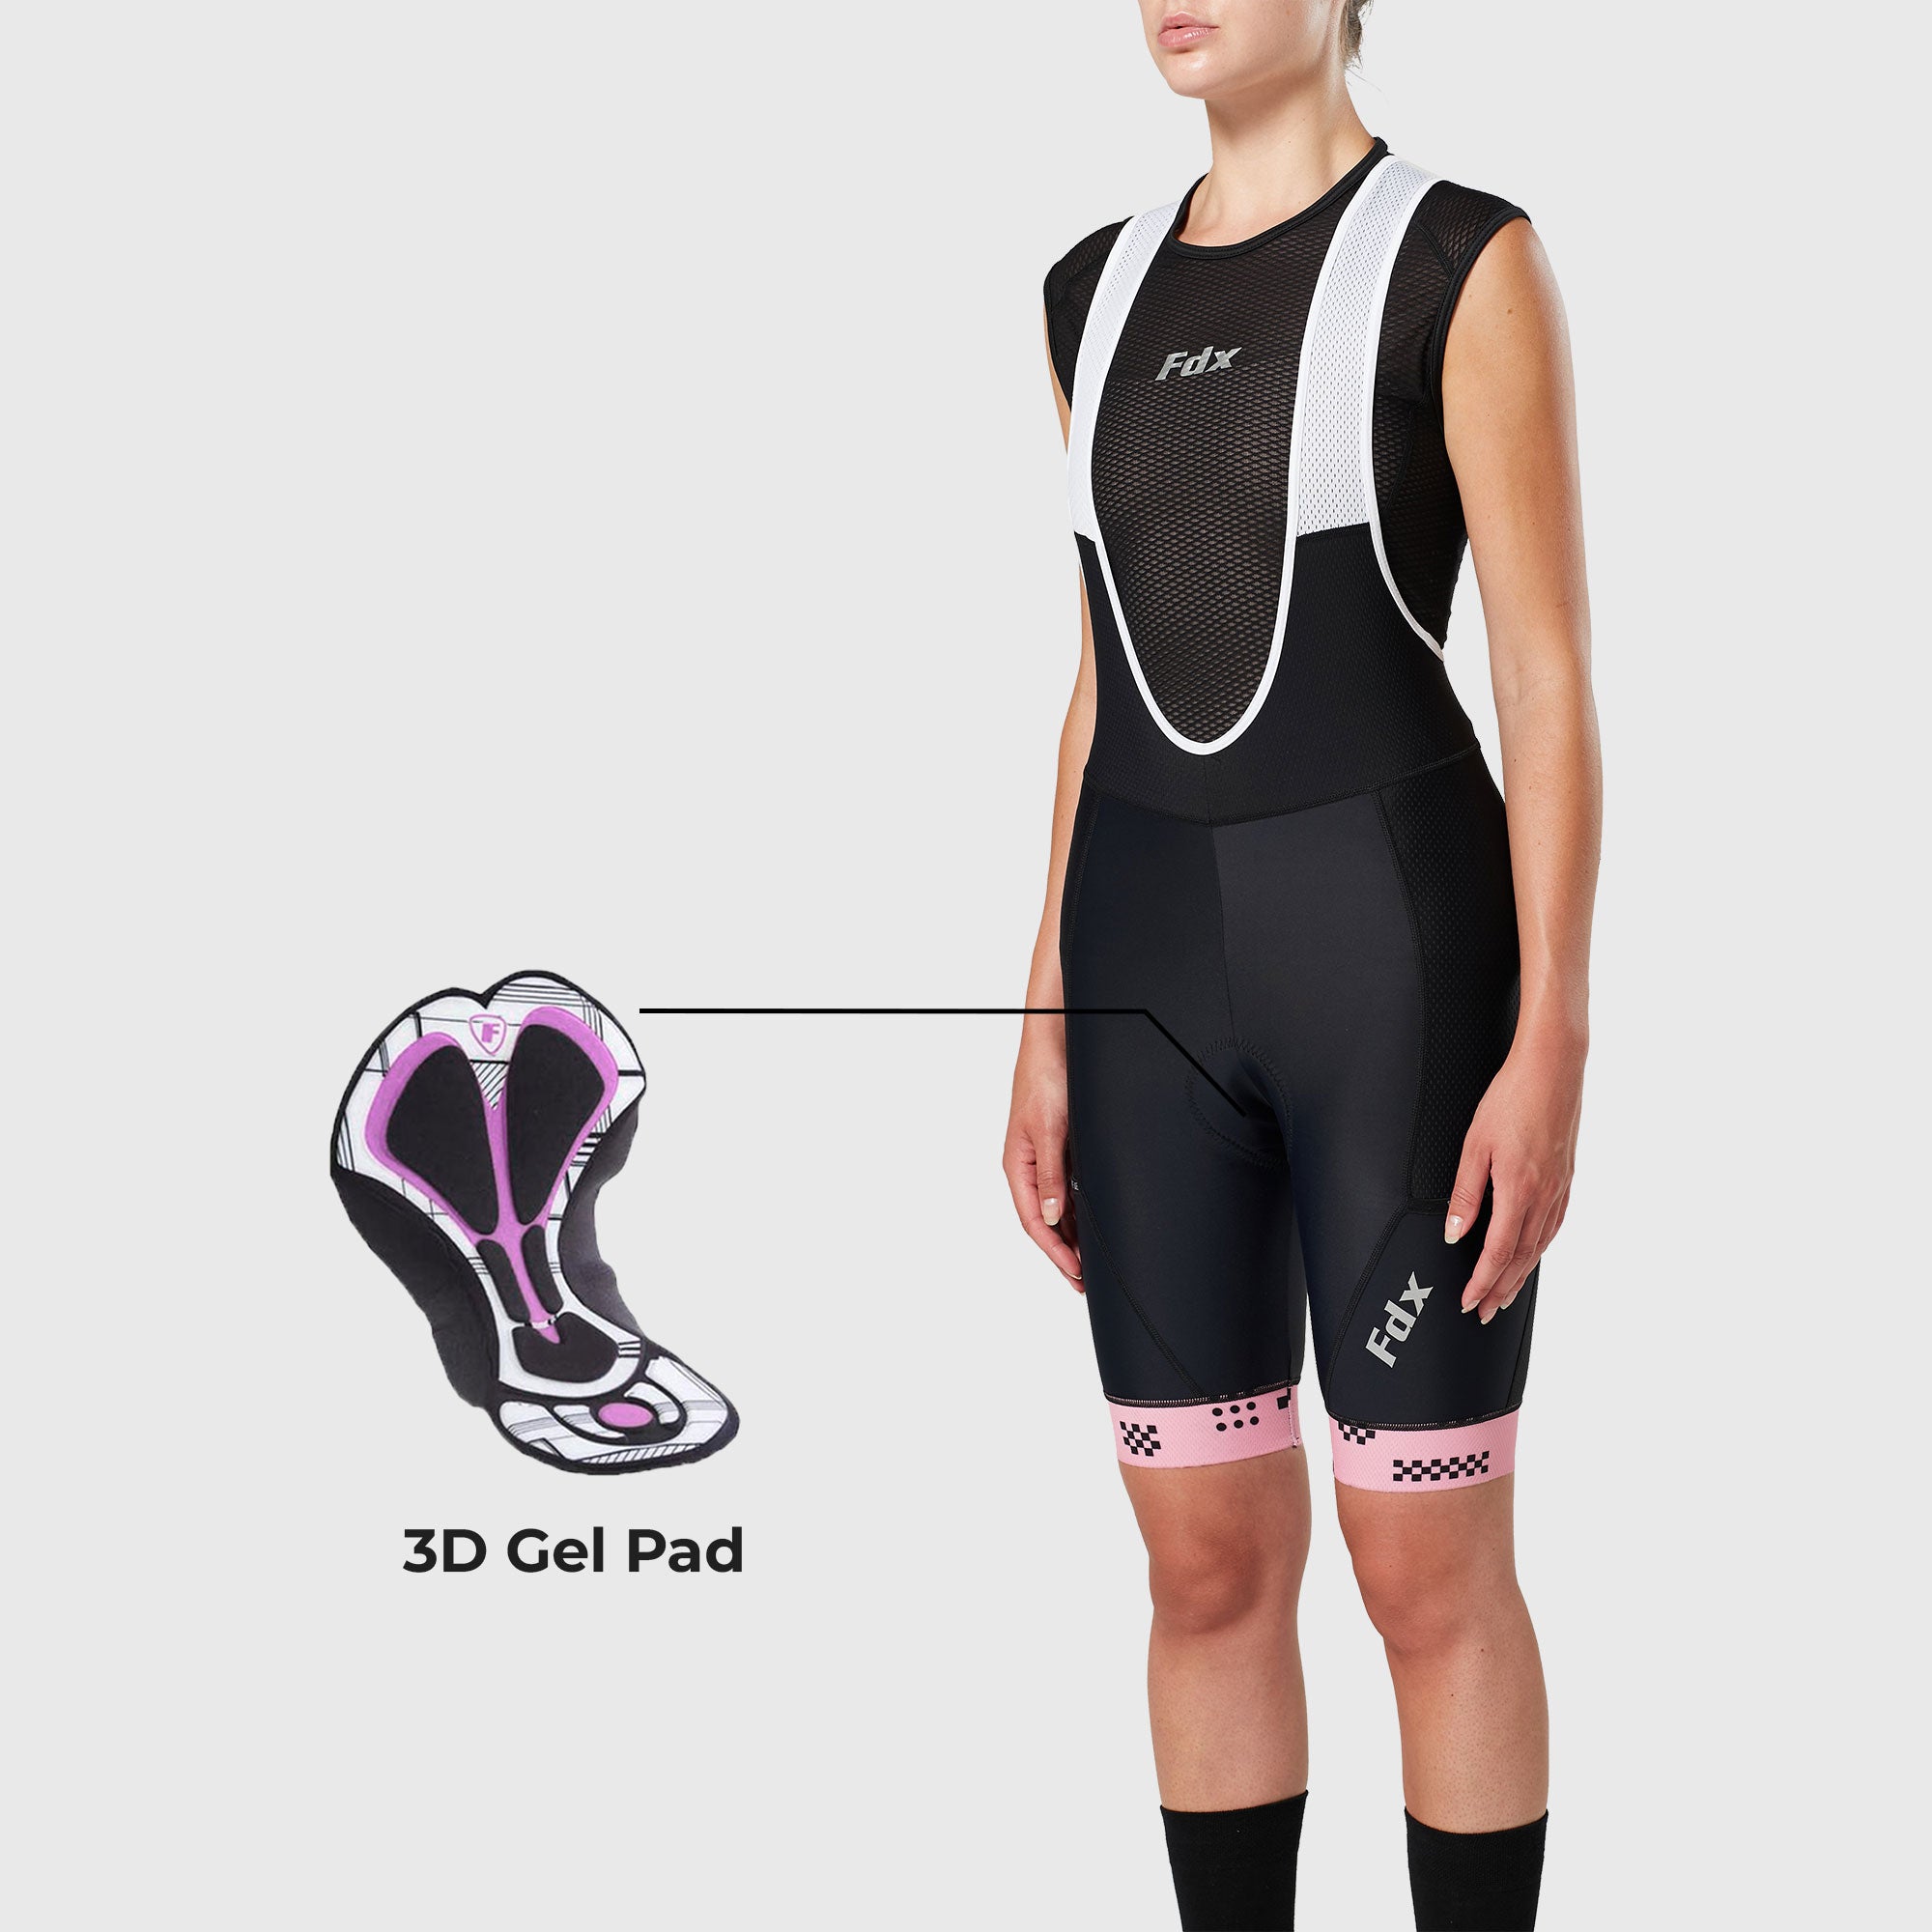 Fdx Womens Black & Tea Pink Gel Padded Cycling Bib Shorts For Summer Best Breathable Outdoor Road Bike Short Length Bib - All Day